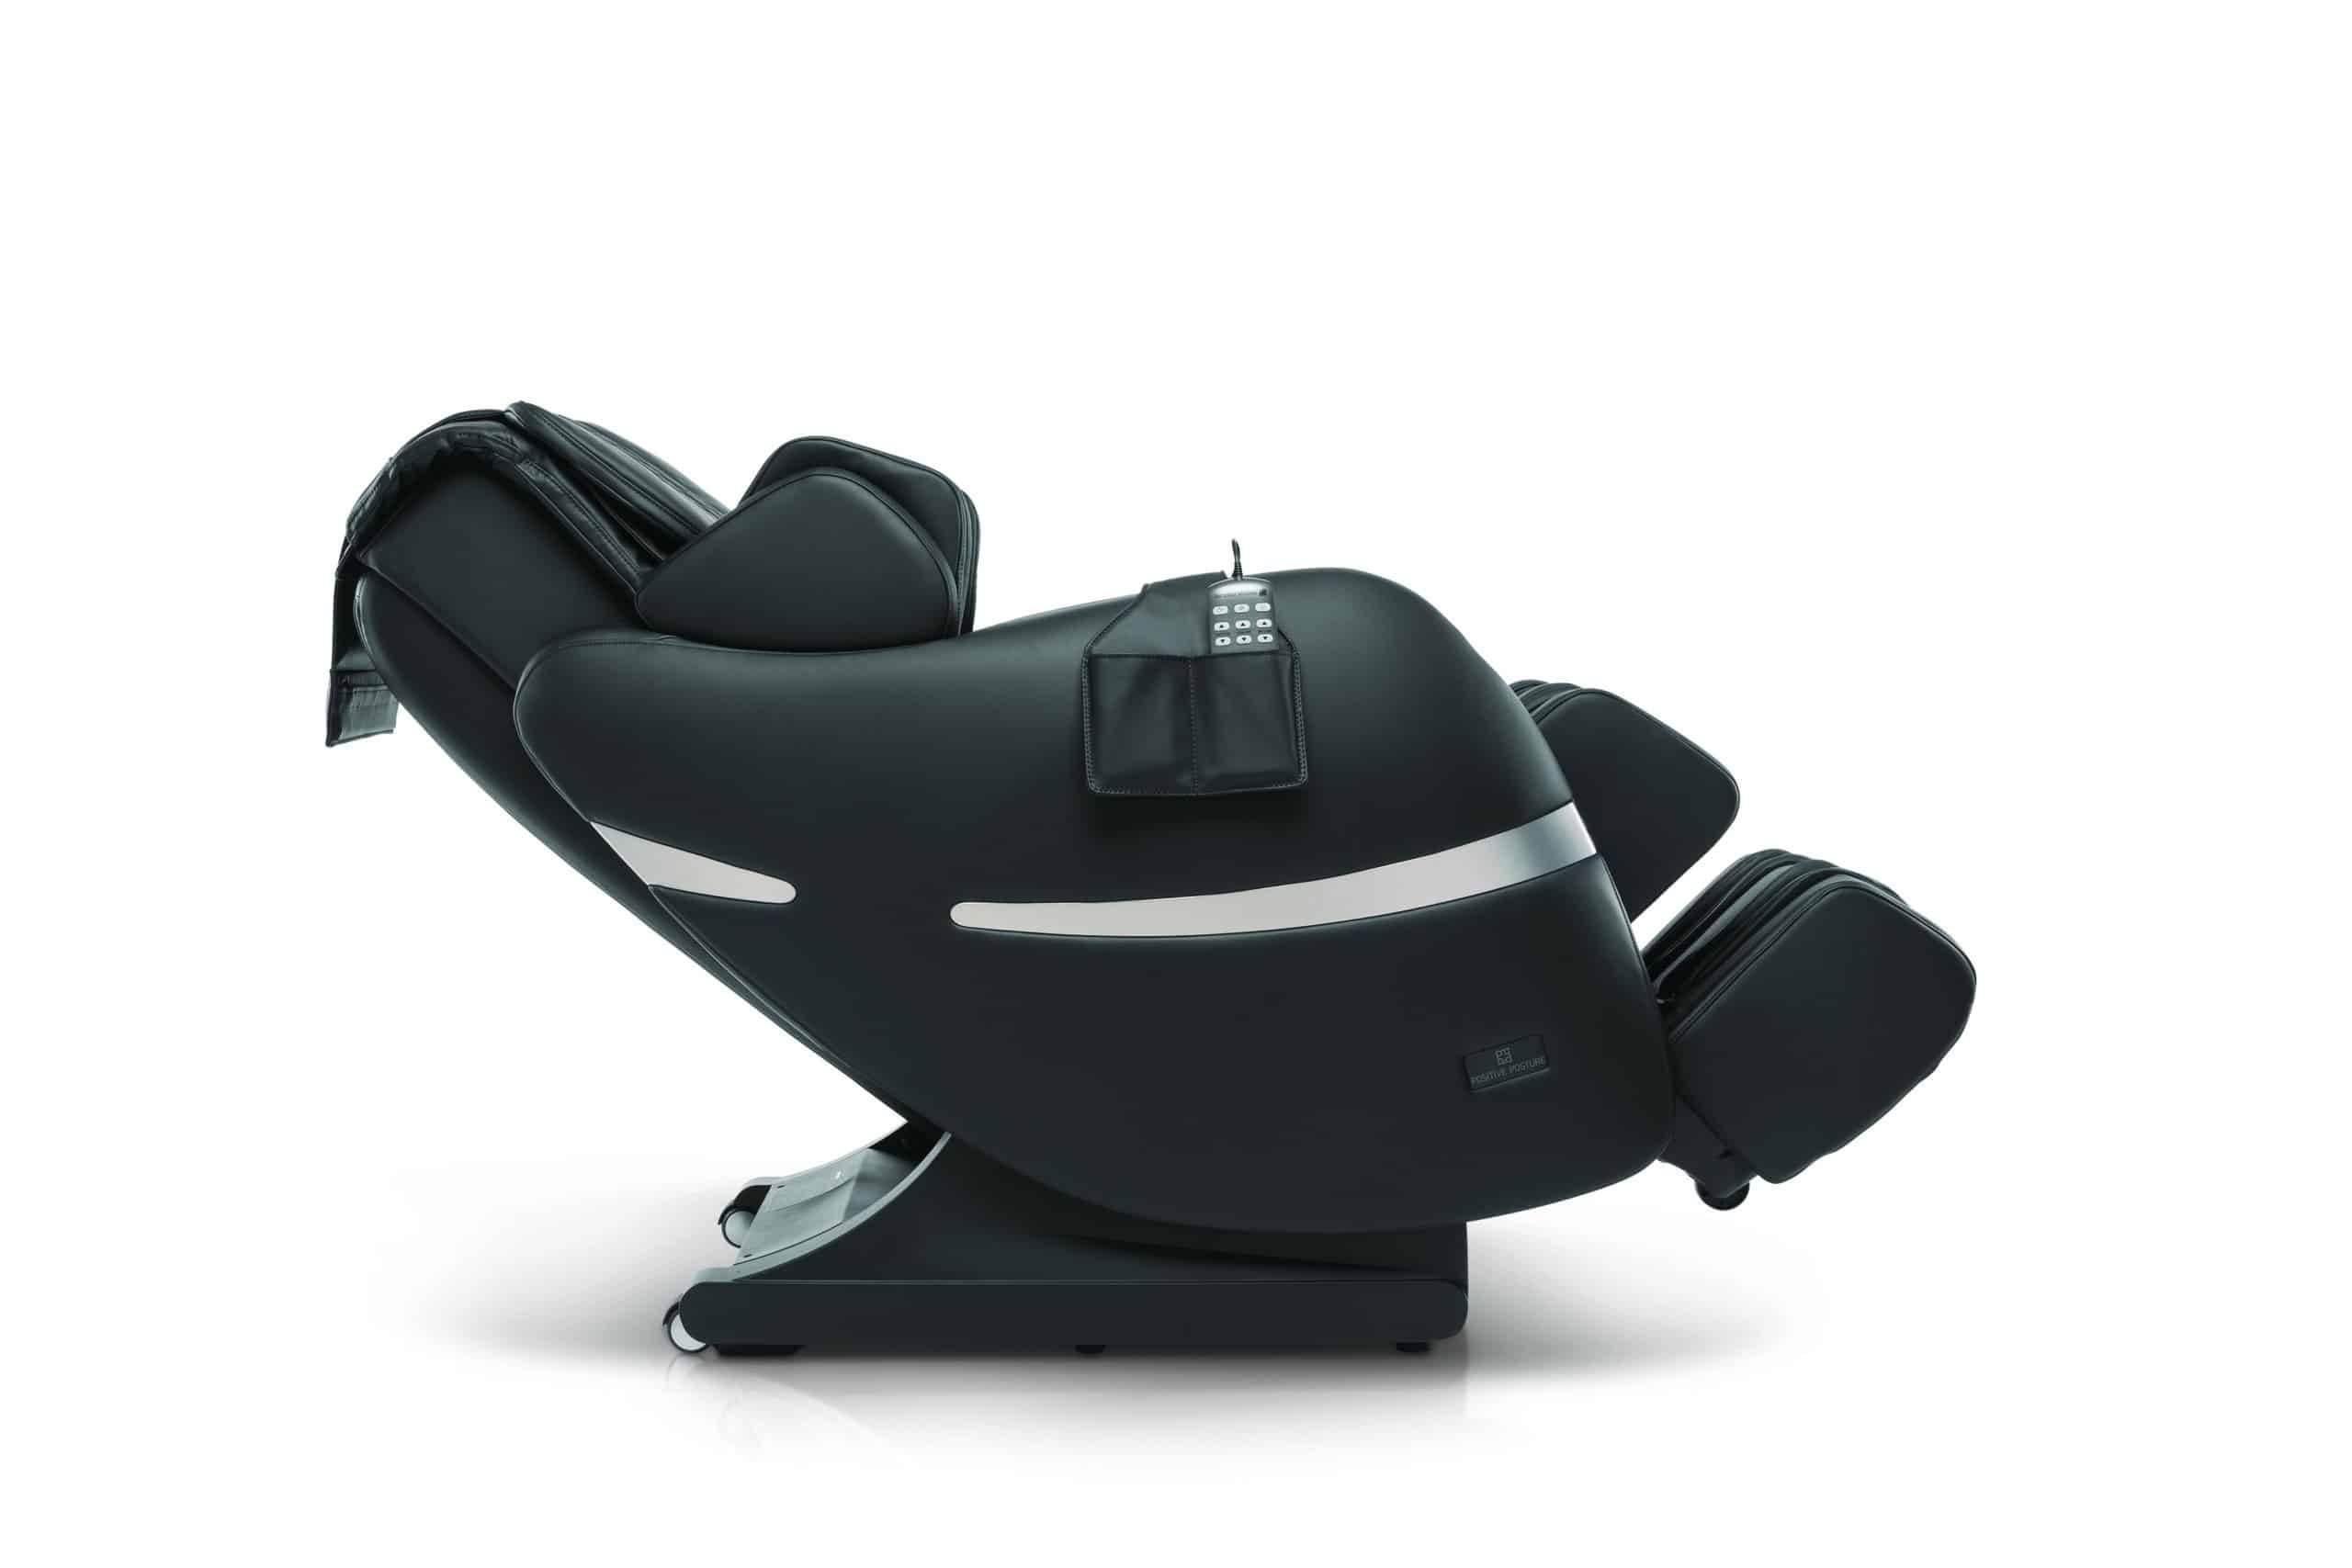 Brio plus in black - partially reclined